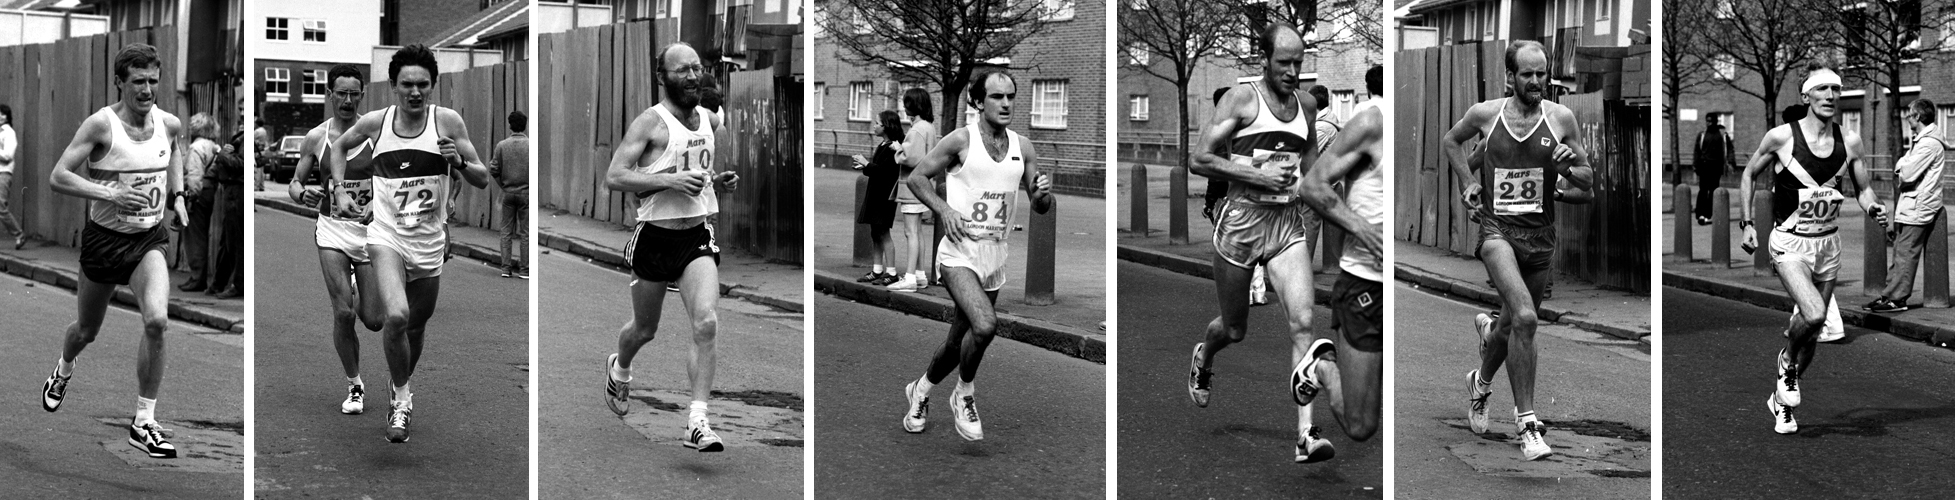 Scots - London Marathon, 1985. Photo G MacIndoe